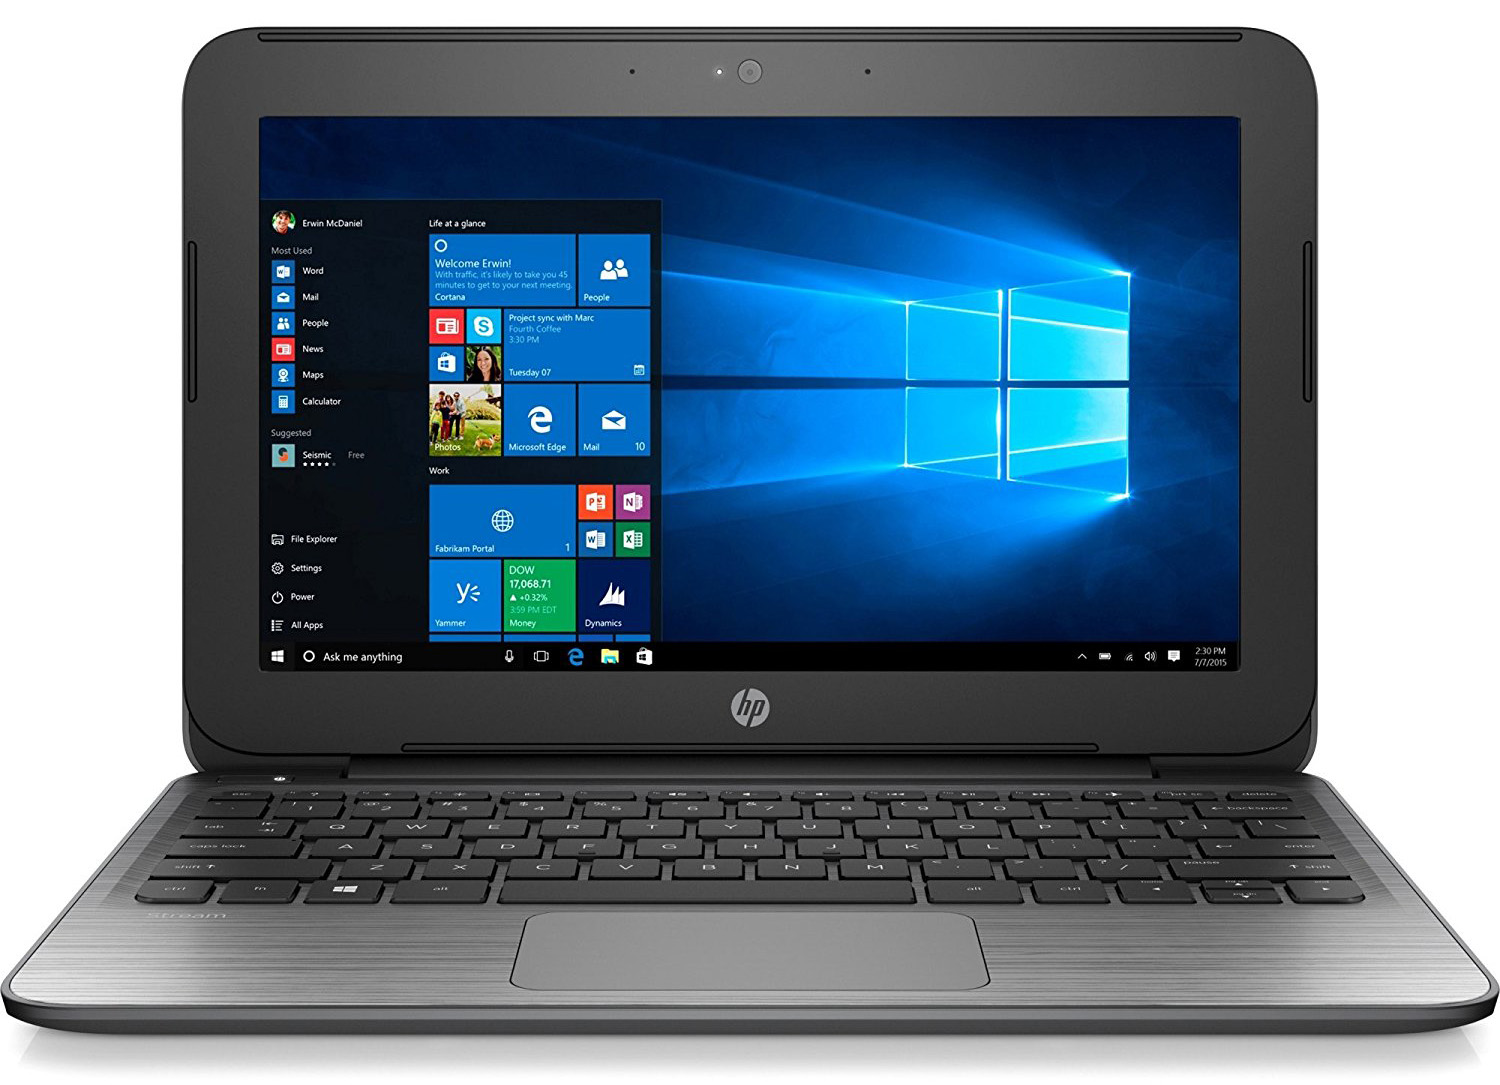 Pre-Owned HP Stream 11 Pro G2 11.6" Laptop Intel N3050 1.60GHz 4GB 64GB eMMC SSD Windows 10 Pro (Refurbished: Good) - image 4 of 4